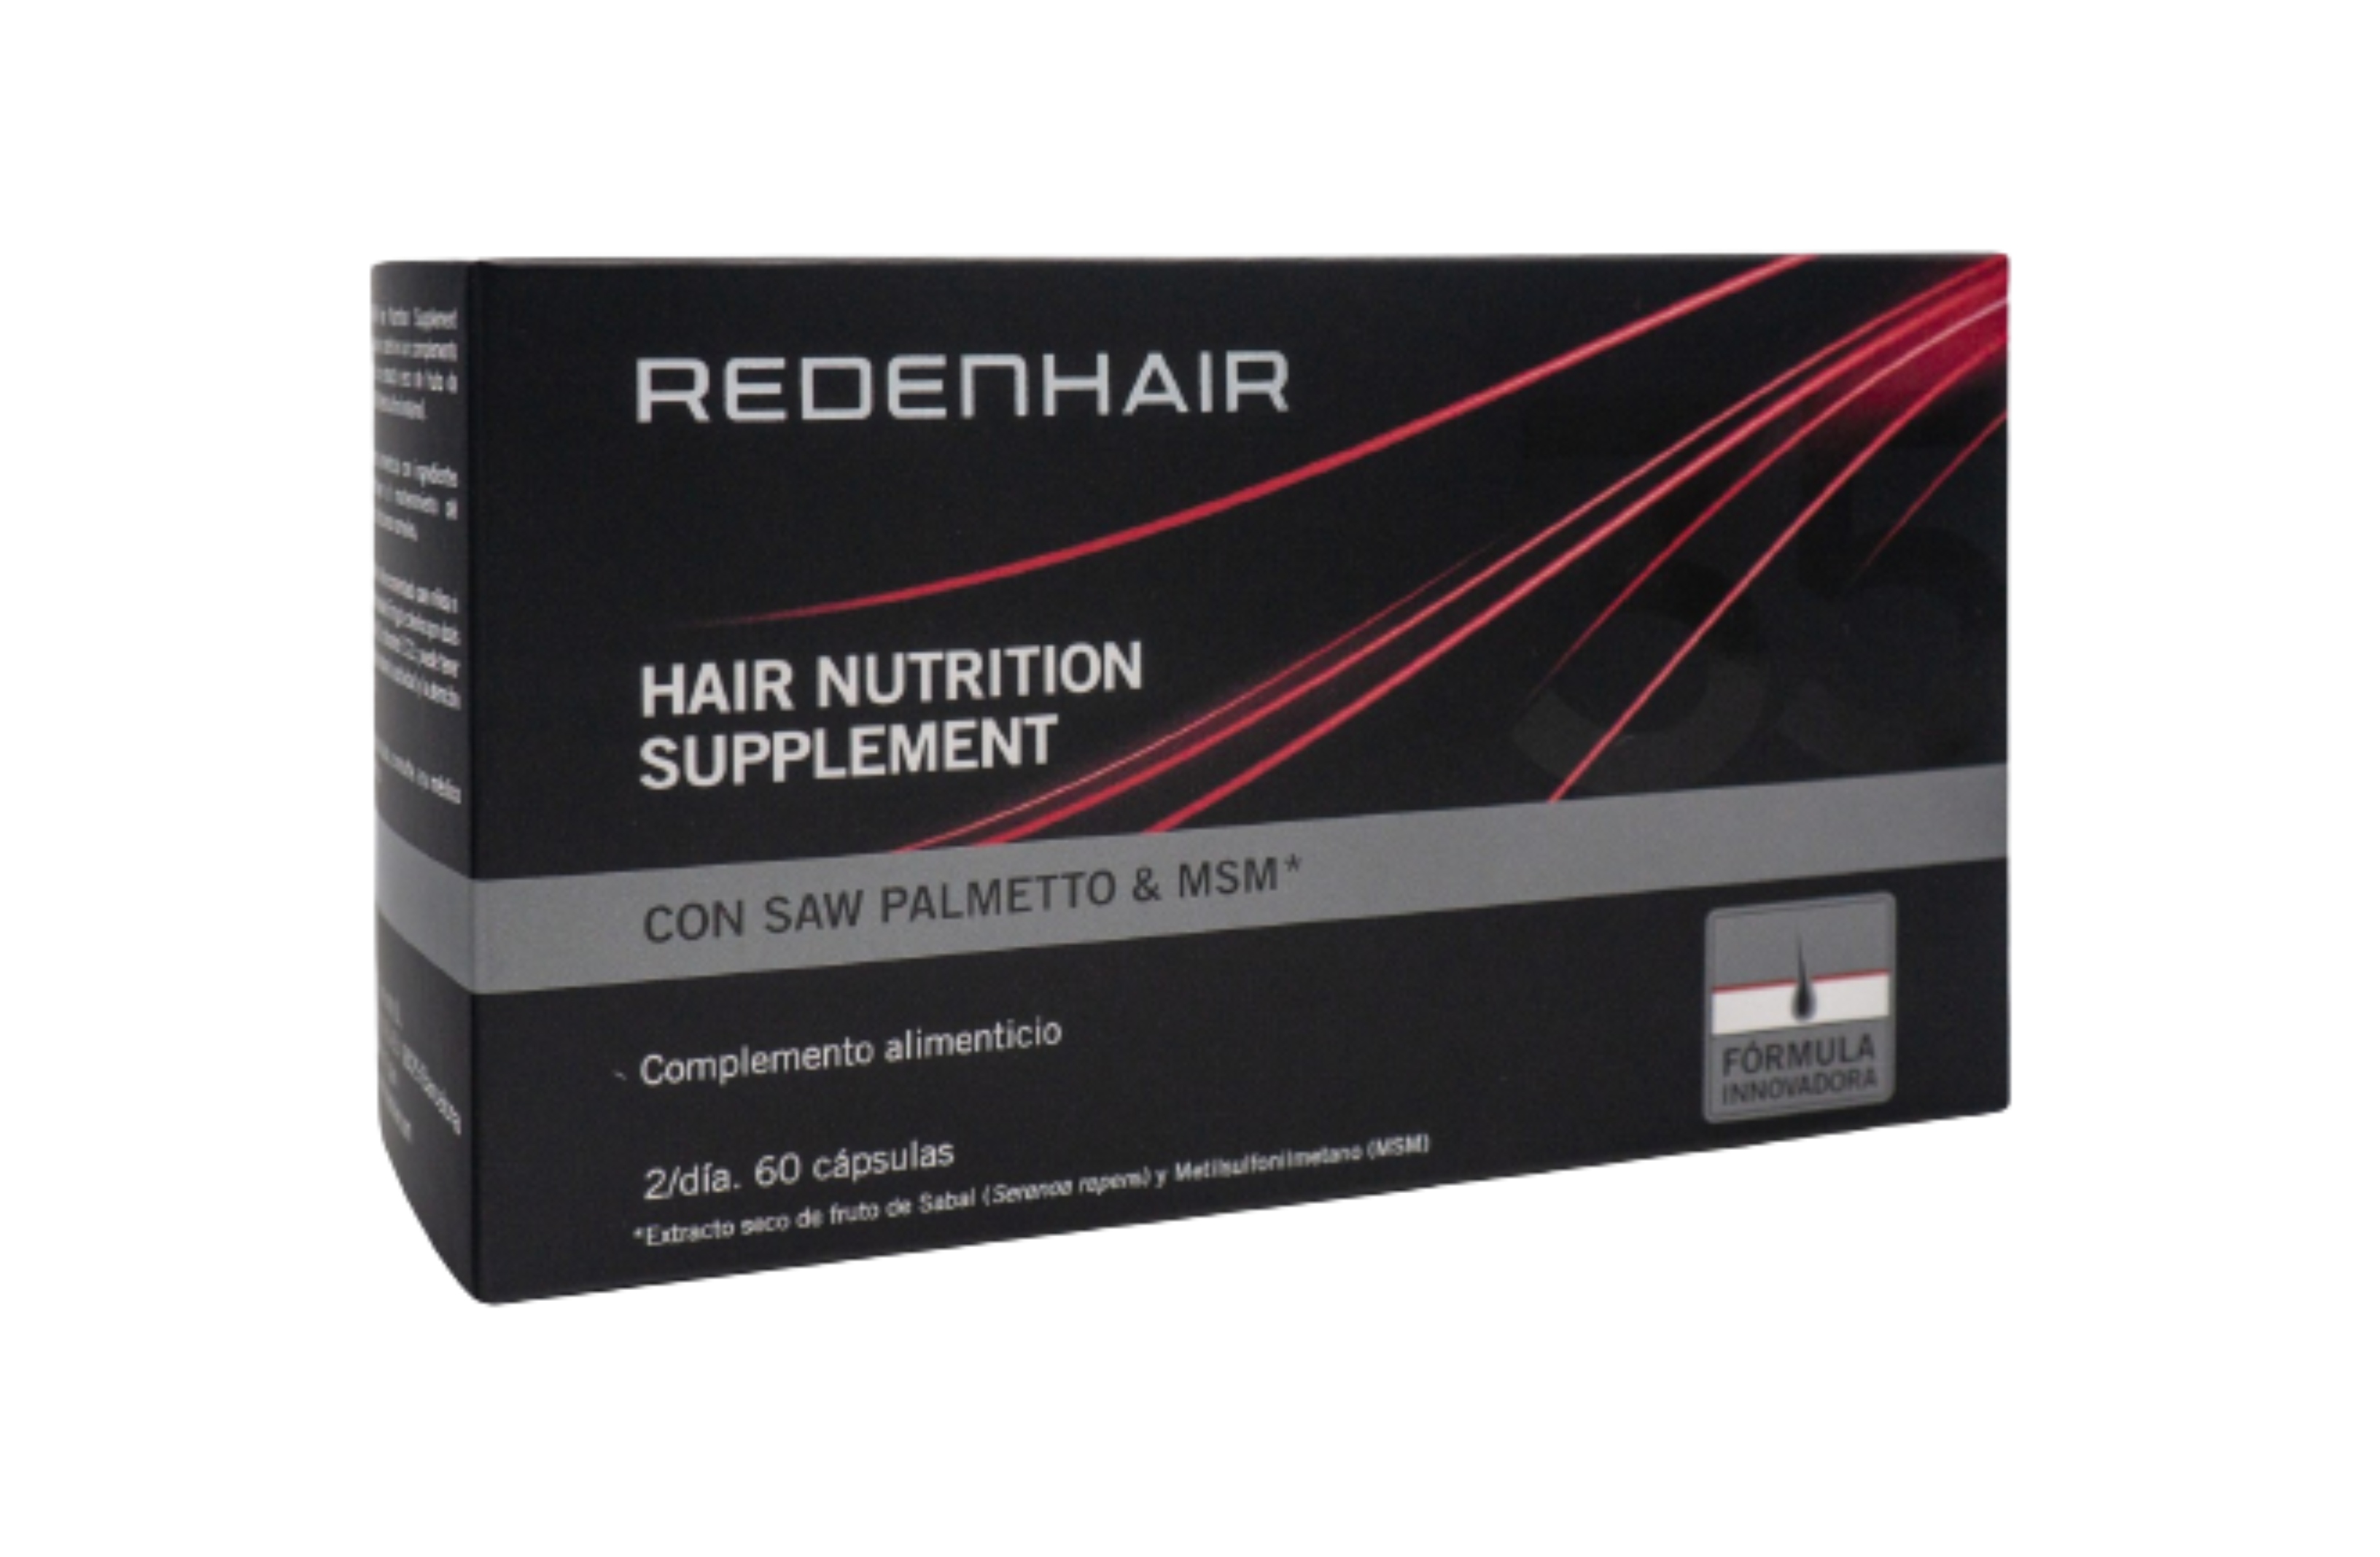 Redenhair 'Hair nutrition supplement' tablets